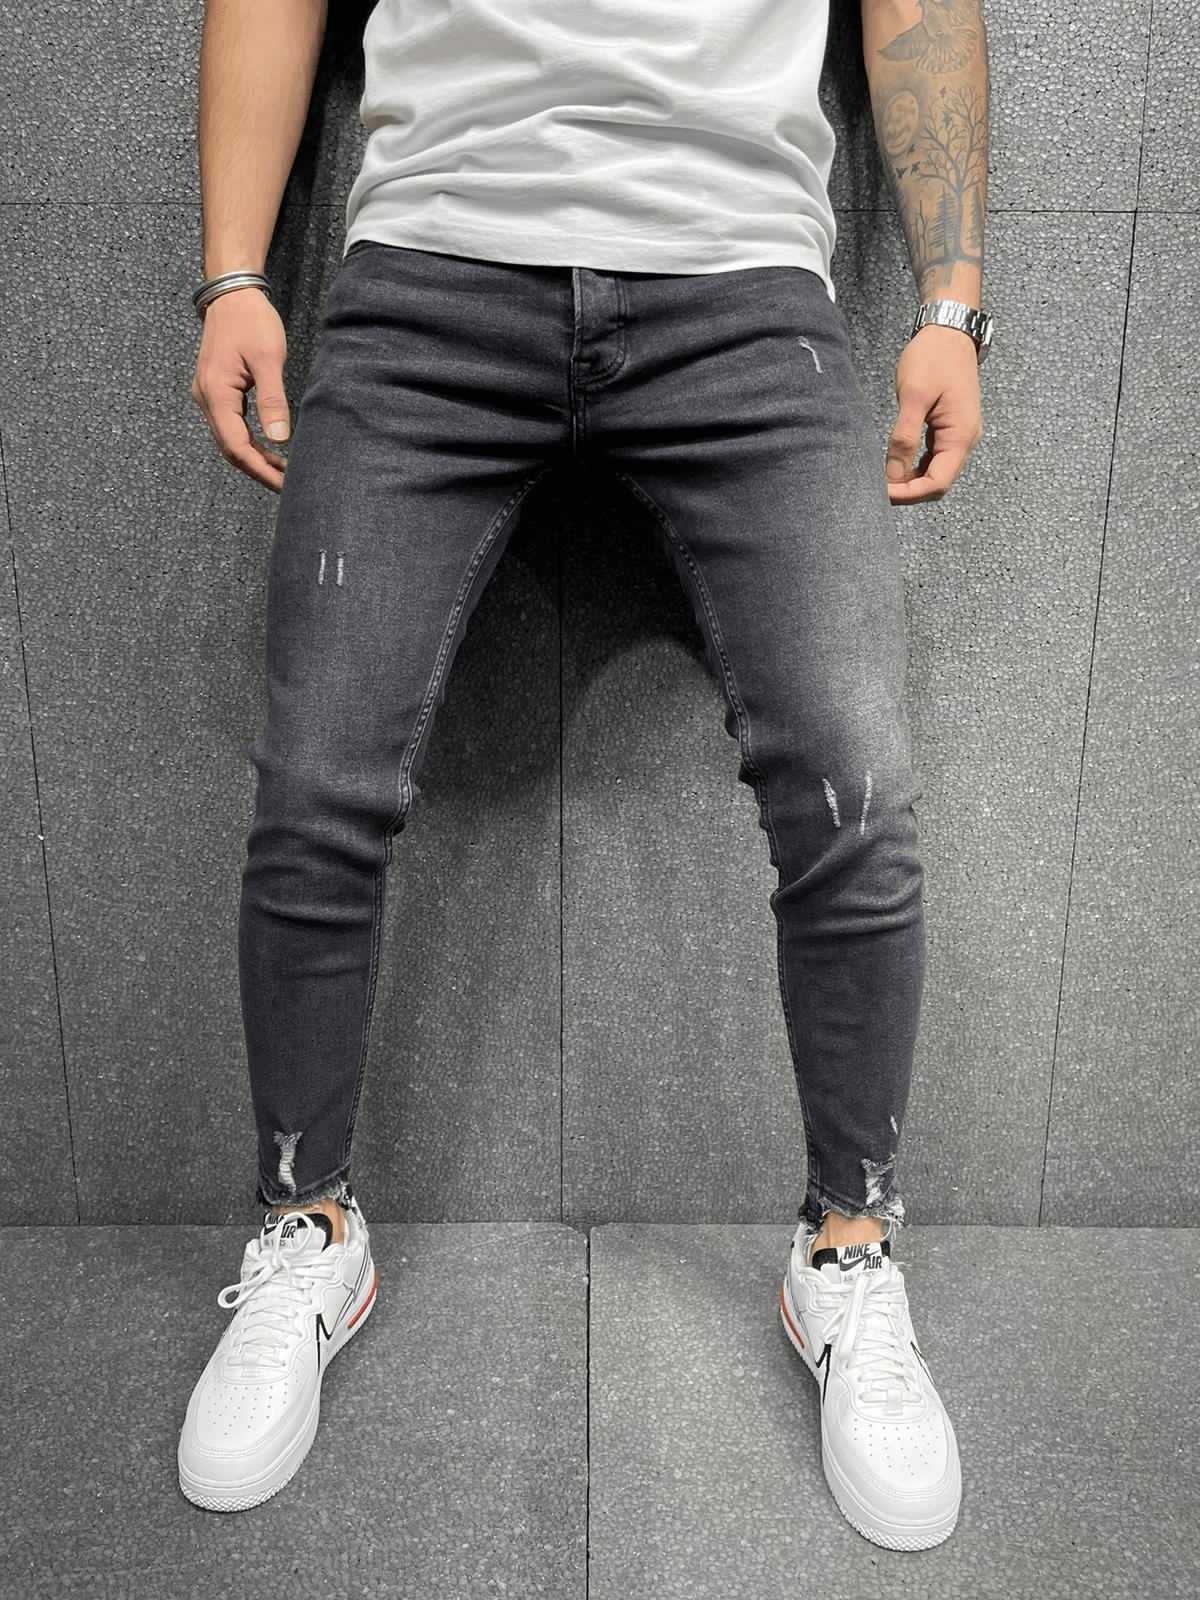 Nos jeans : Jean slim noir destroy homme | Mode Urbaine